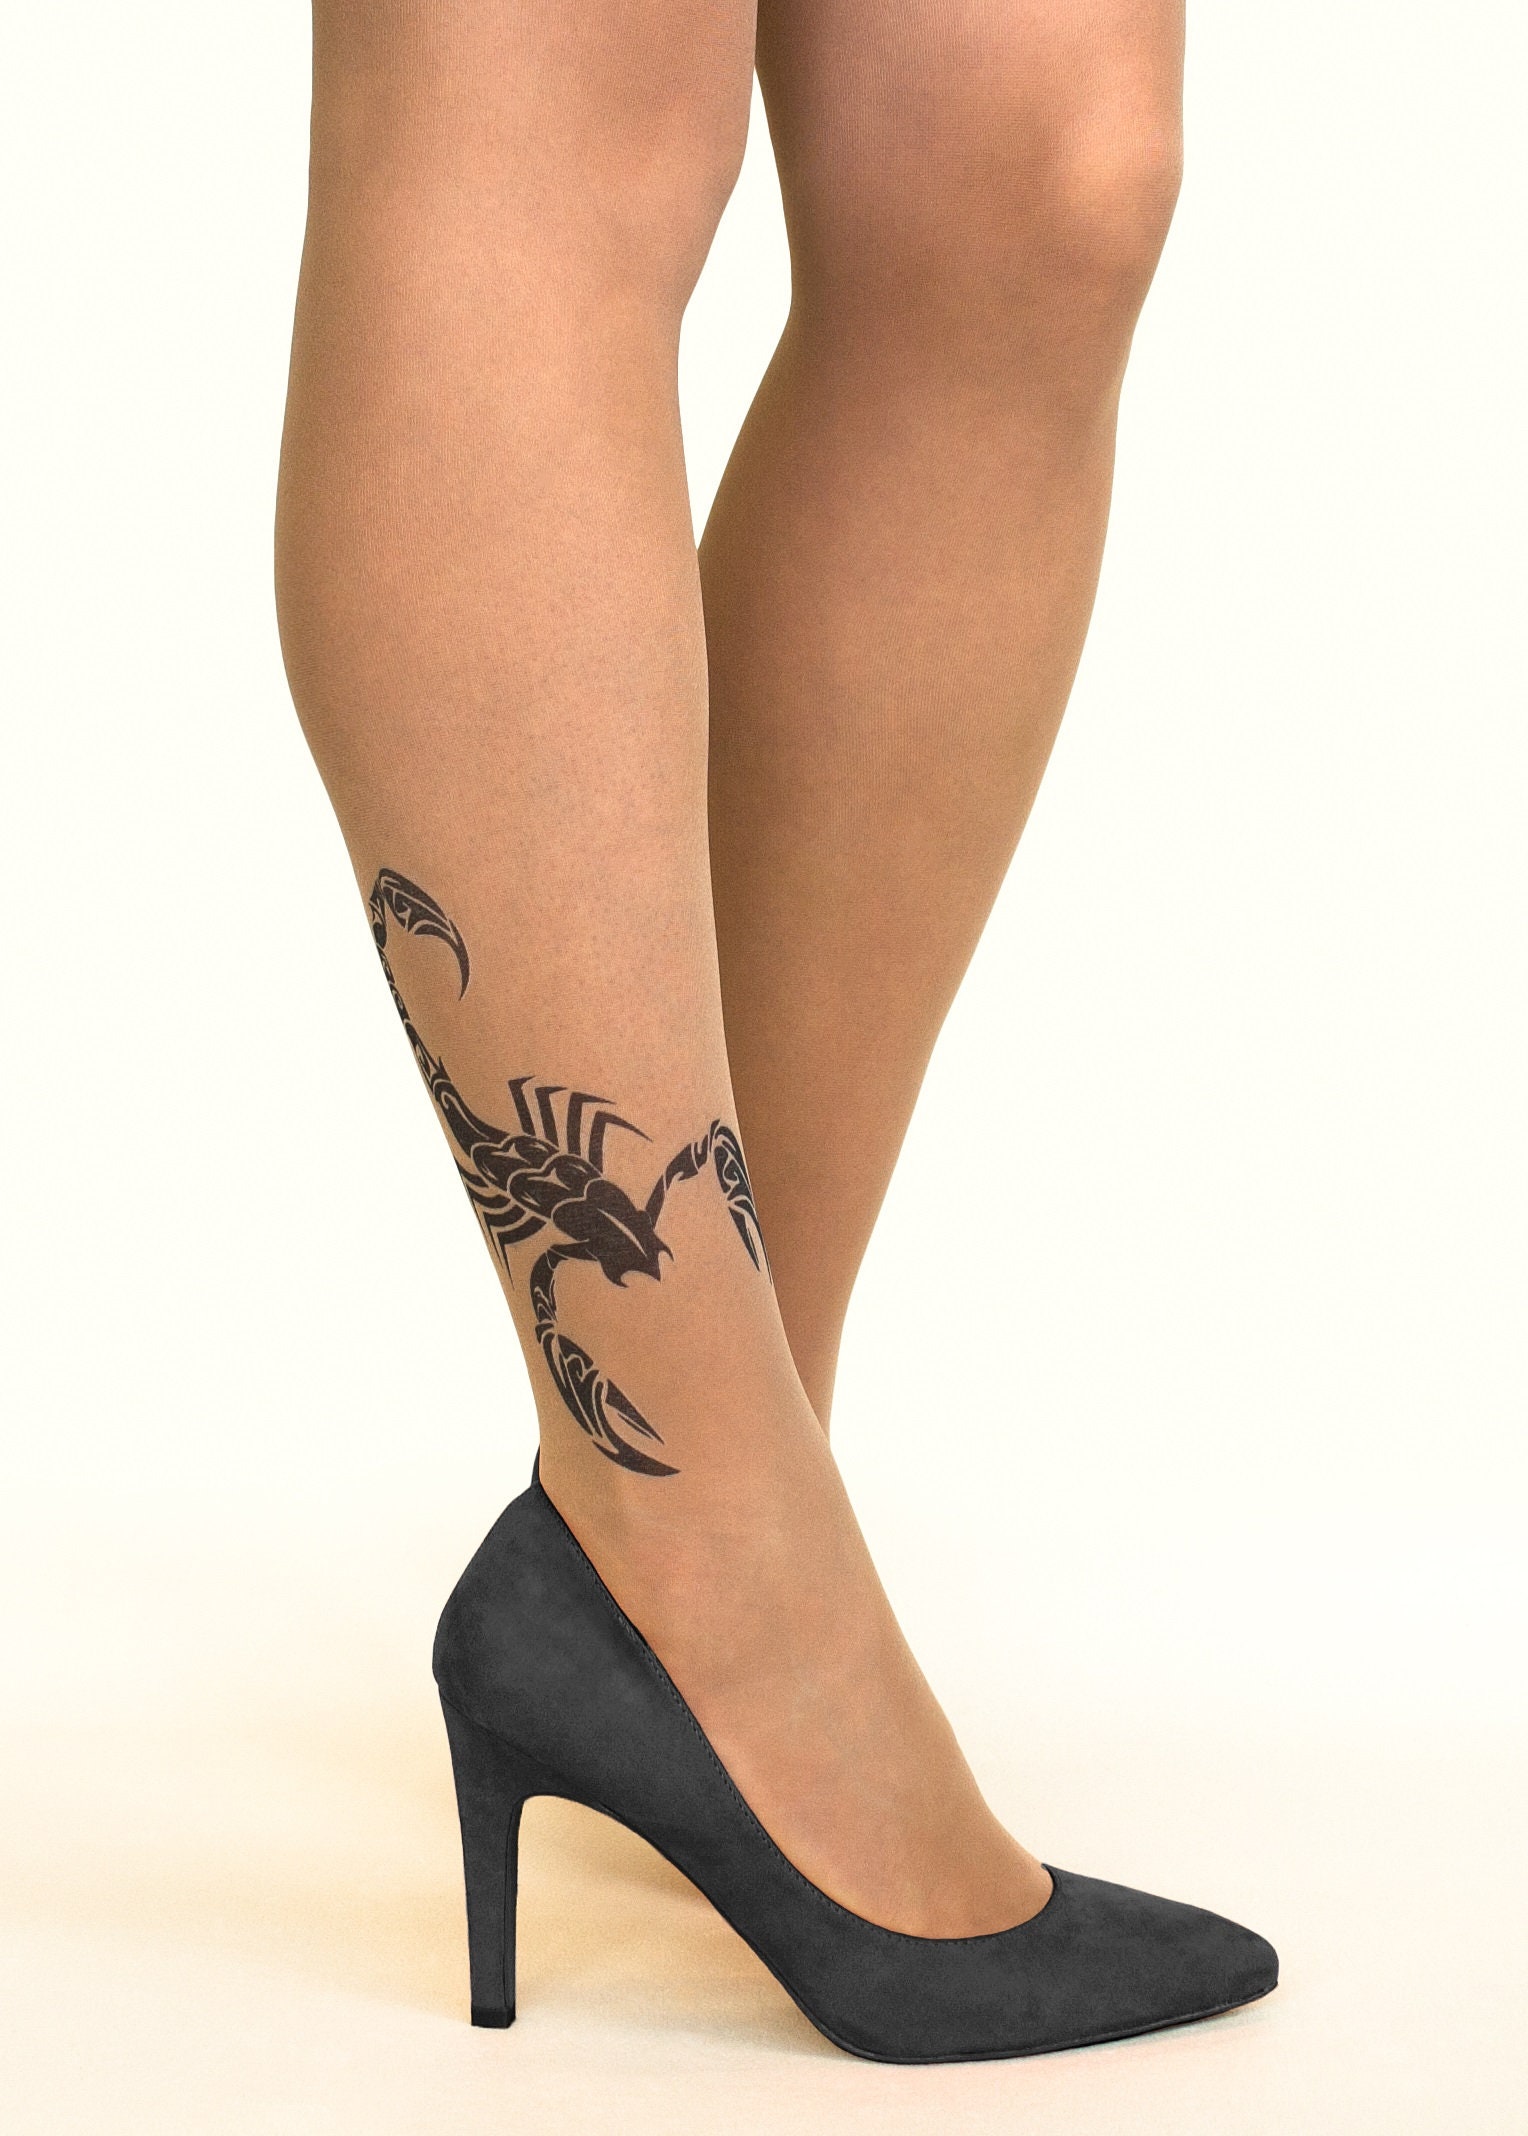 New inked! 🦂😍 #tattoo #scorpion 💉: @lukalajoie | Instagram